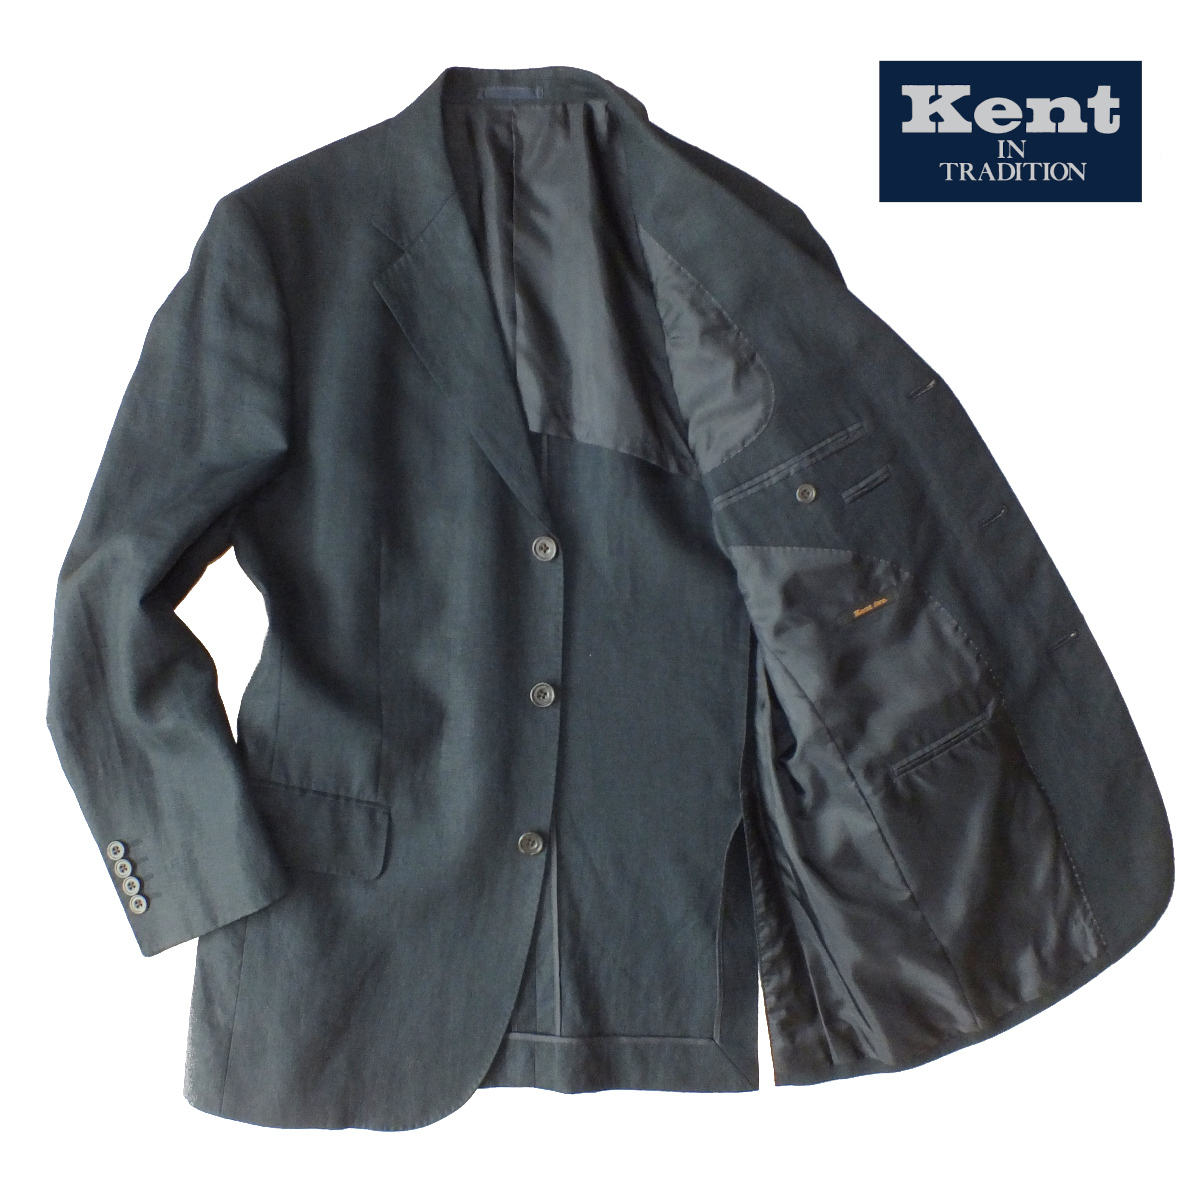 Kent tailored by VAN JACKET 紺ブレザー ジャケット/アウター